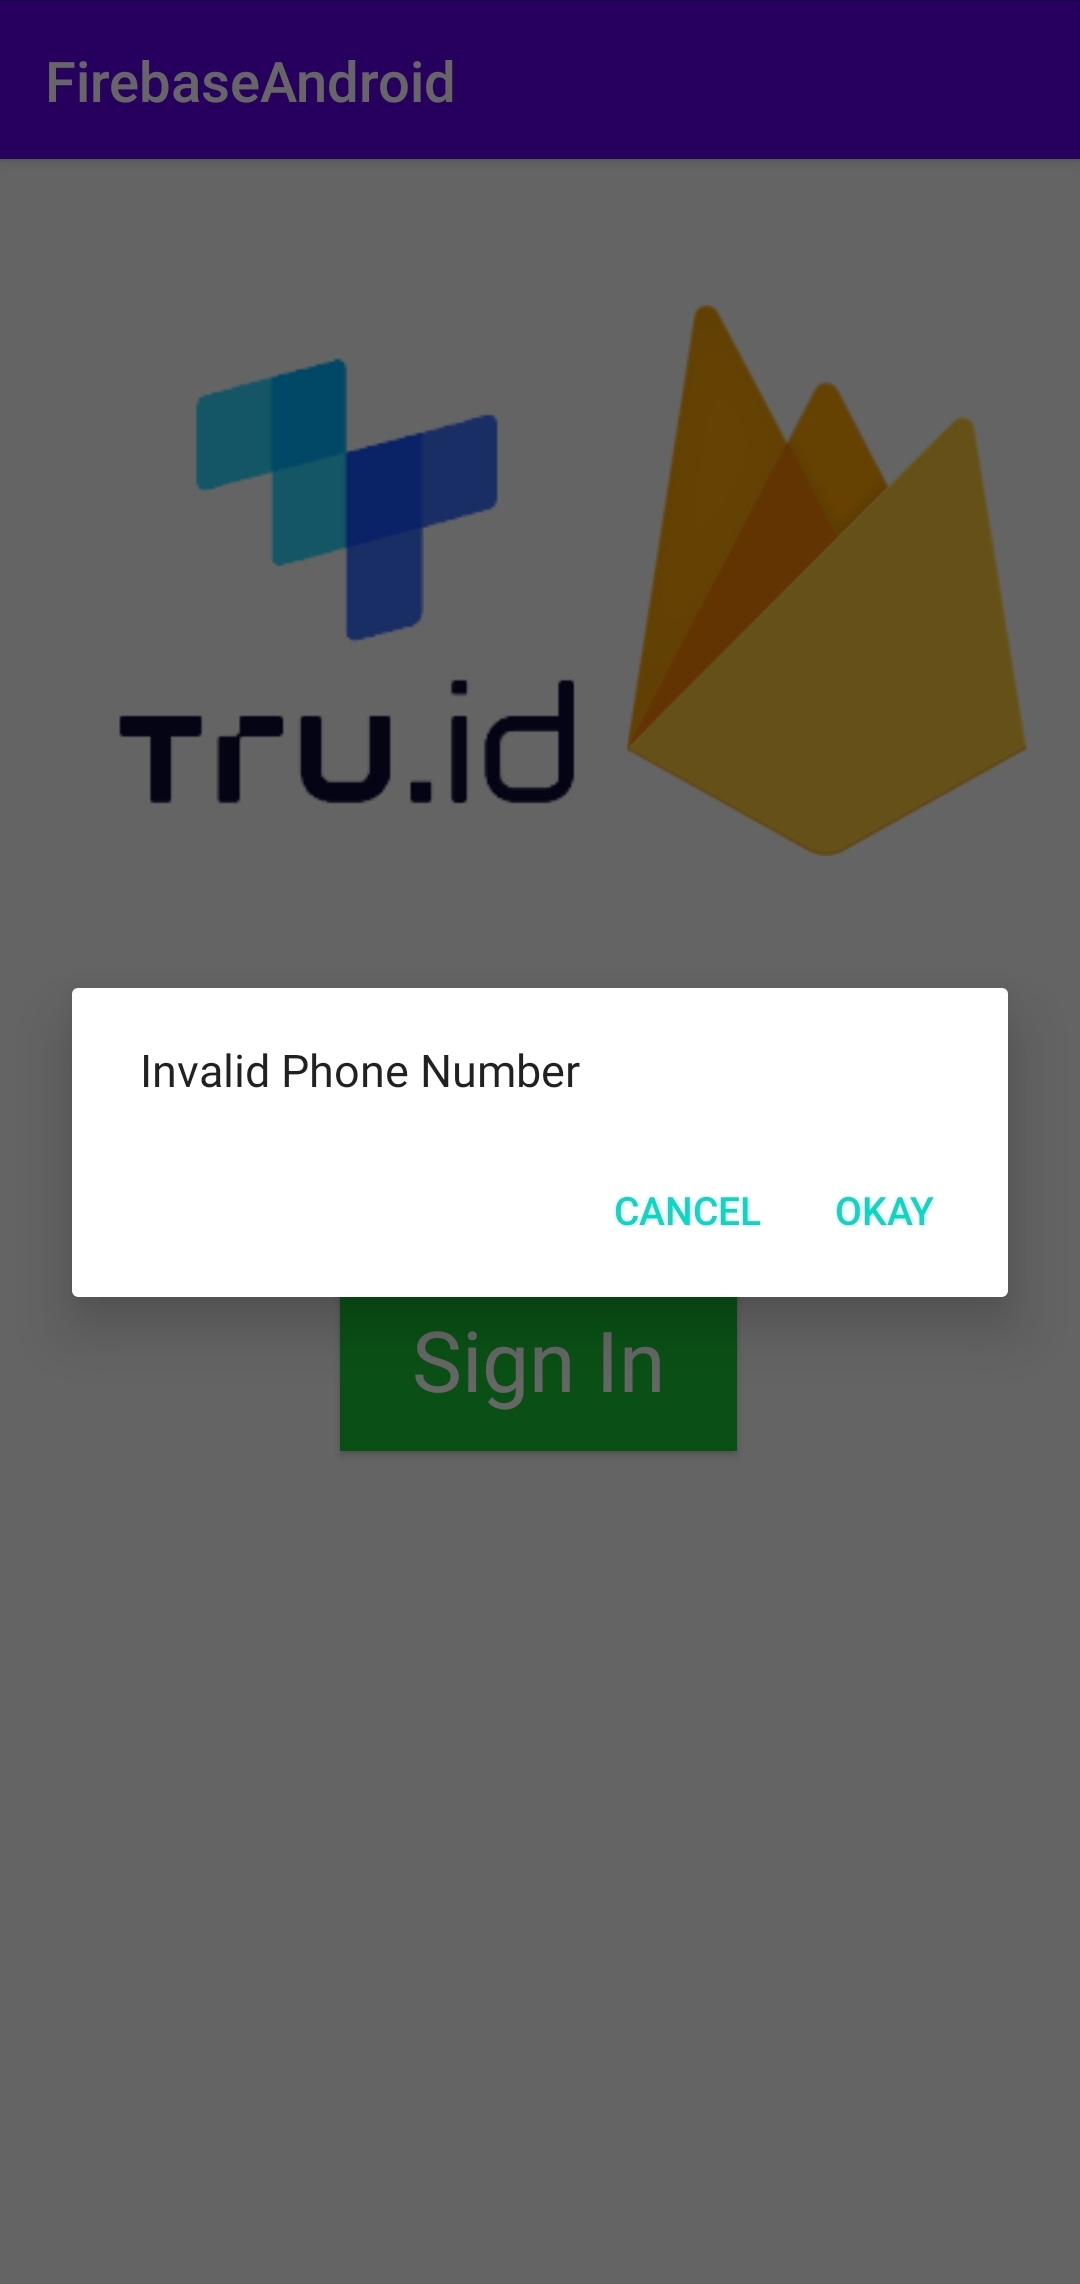 tru.ID verification successful but Firebase Phone Auth verification failed